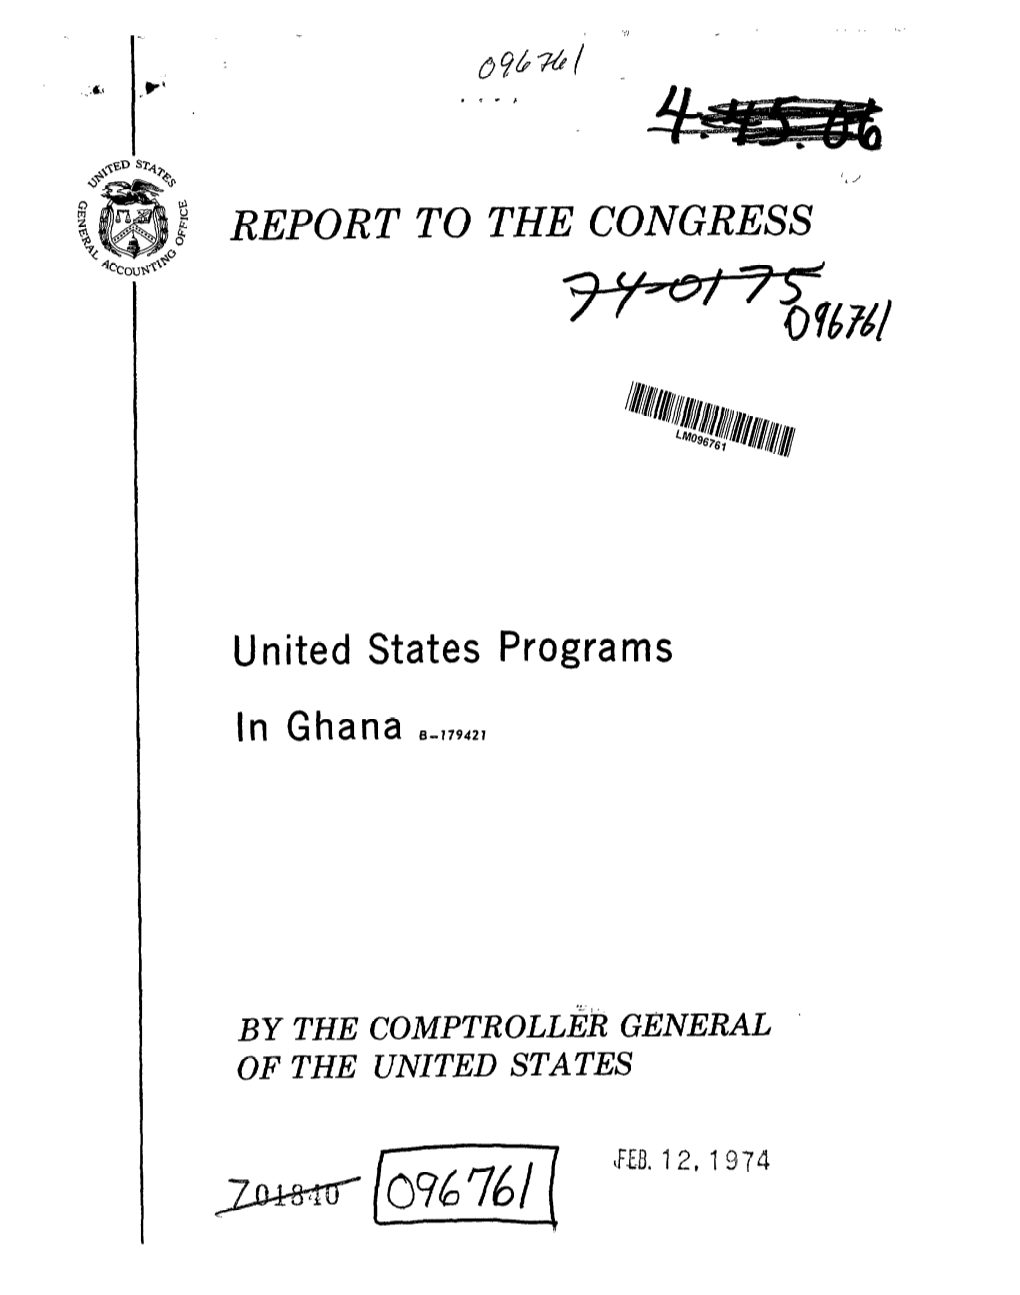 B-179421 United States Programs in Ghana